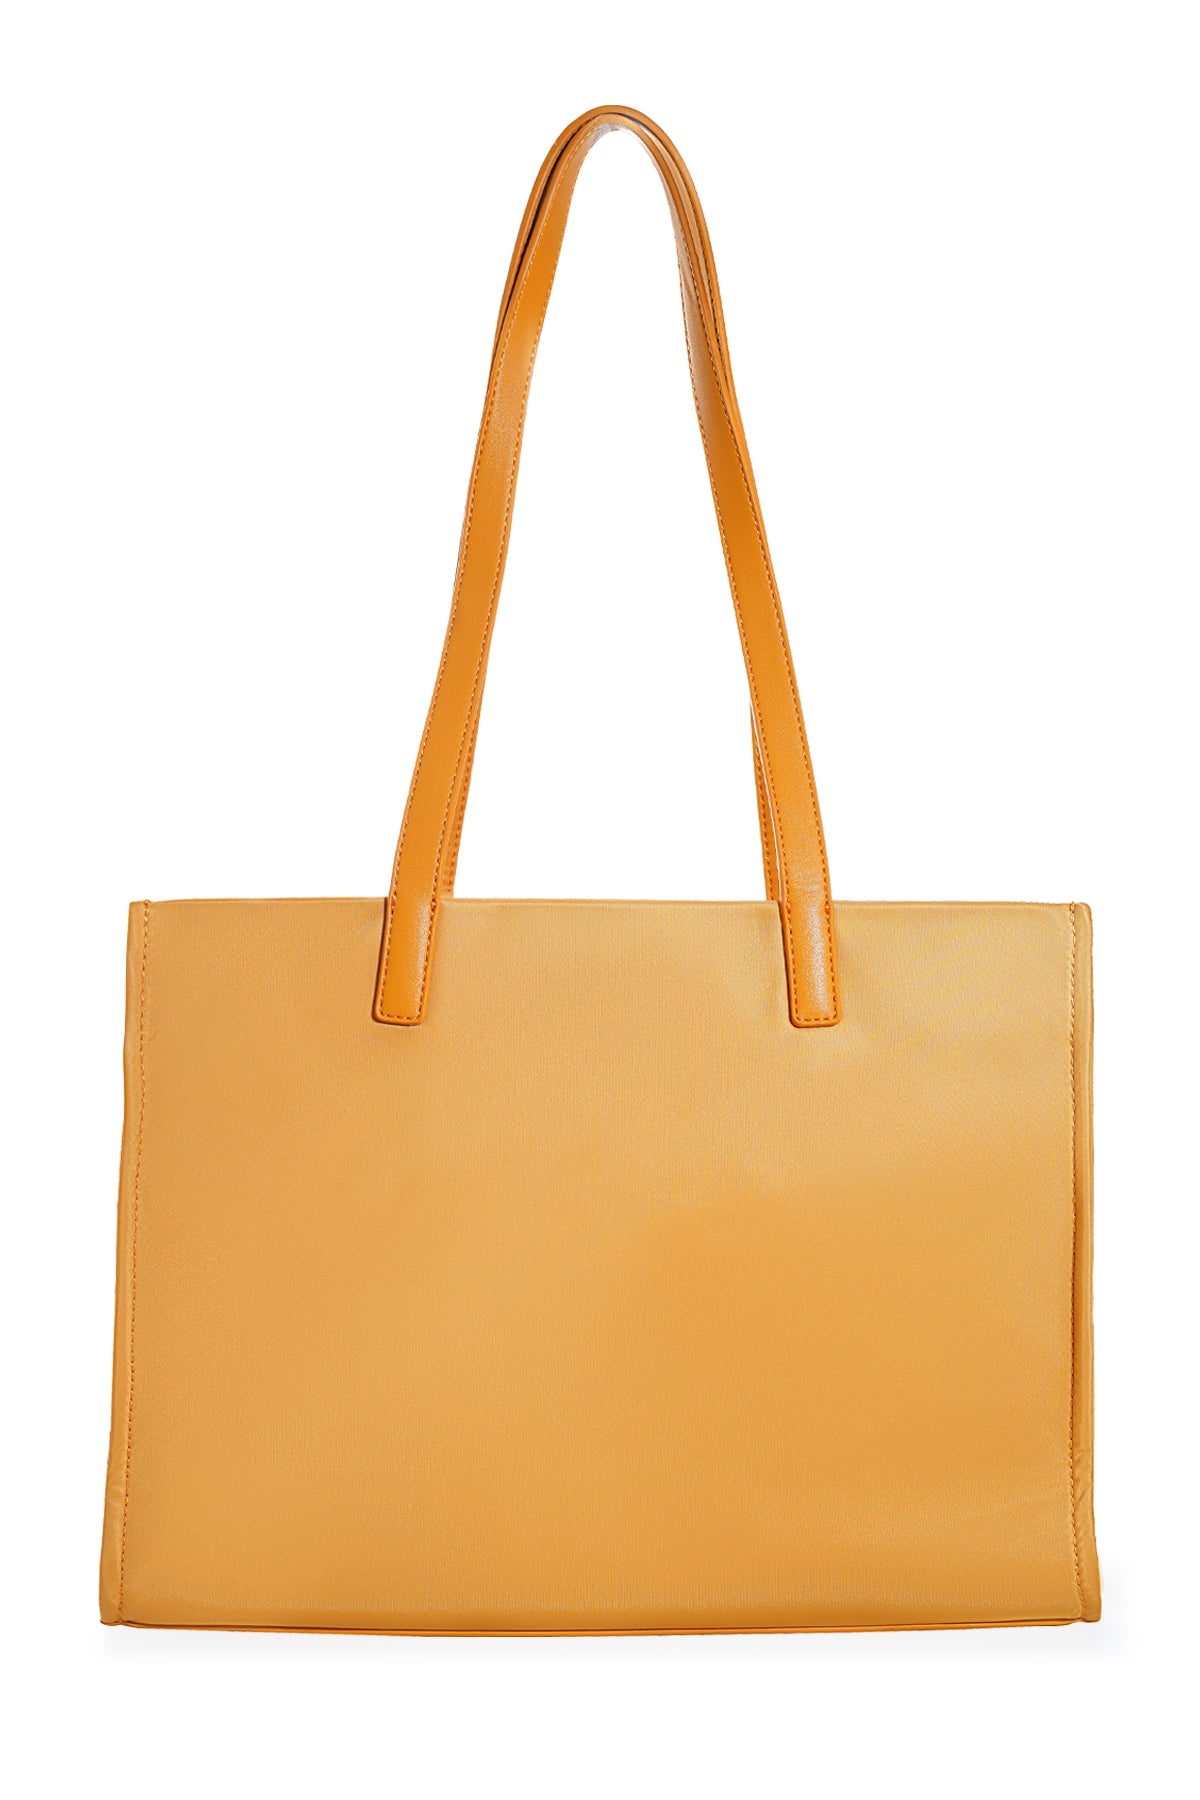 MANGO Basket Shopper Bag BRAIDED COTTON Ecru WOOD HANDLES Tote XL HandBag  NWT | eBay